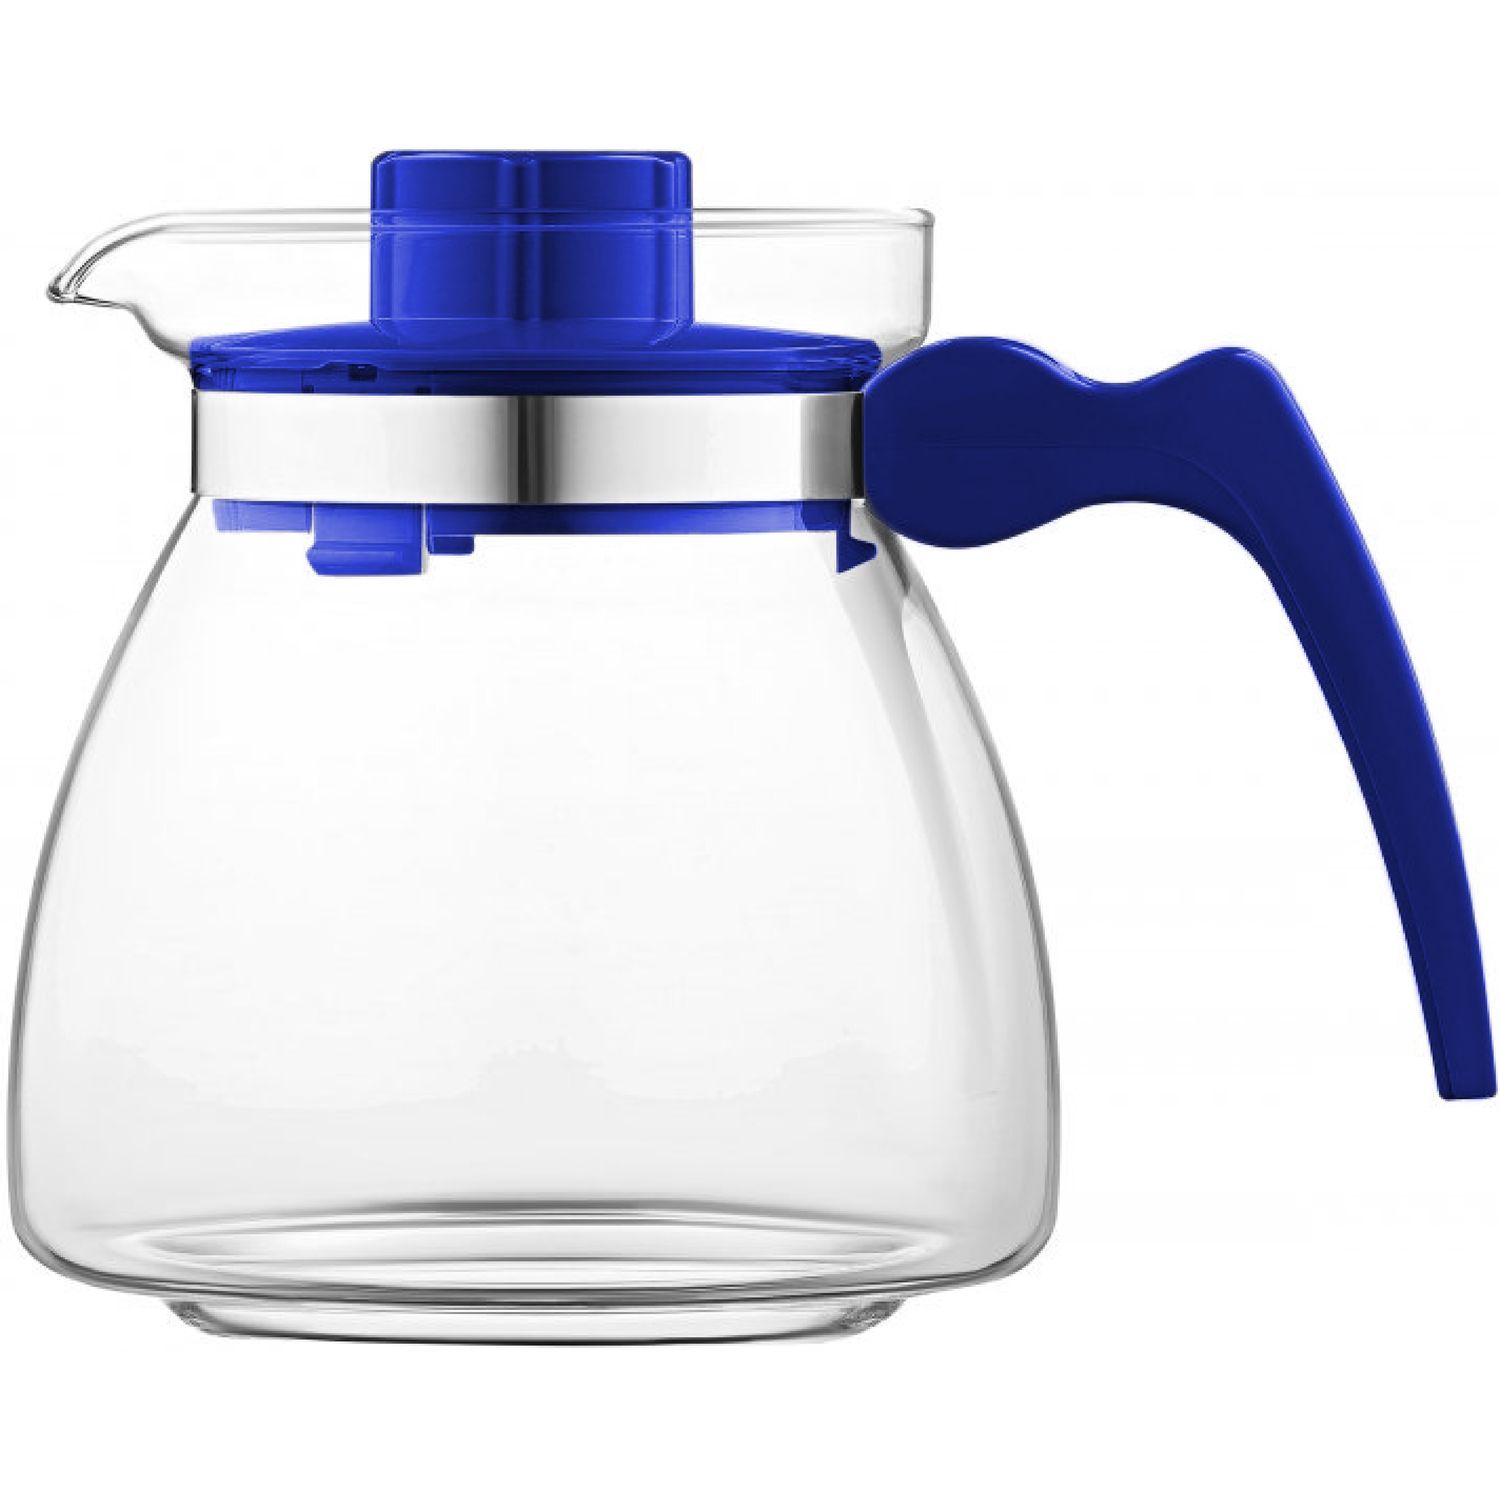 Заварочный чайник Termisil с фильтром синий 1.25 л (CDES125Z) - фото 2